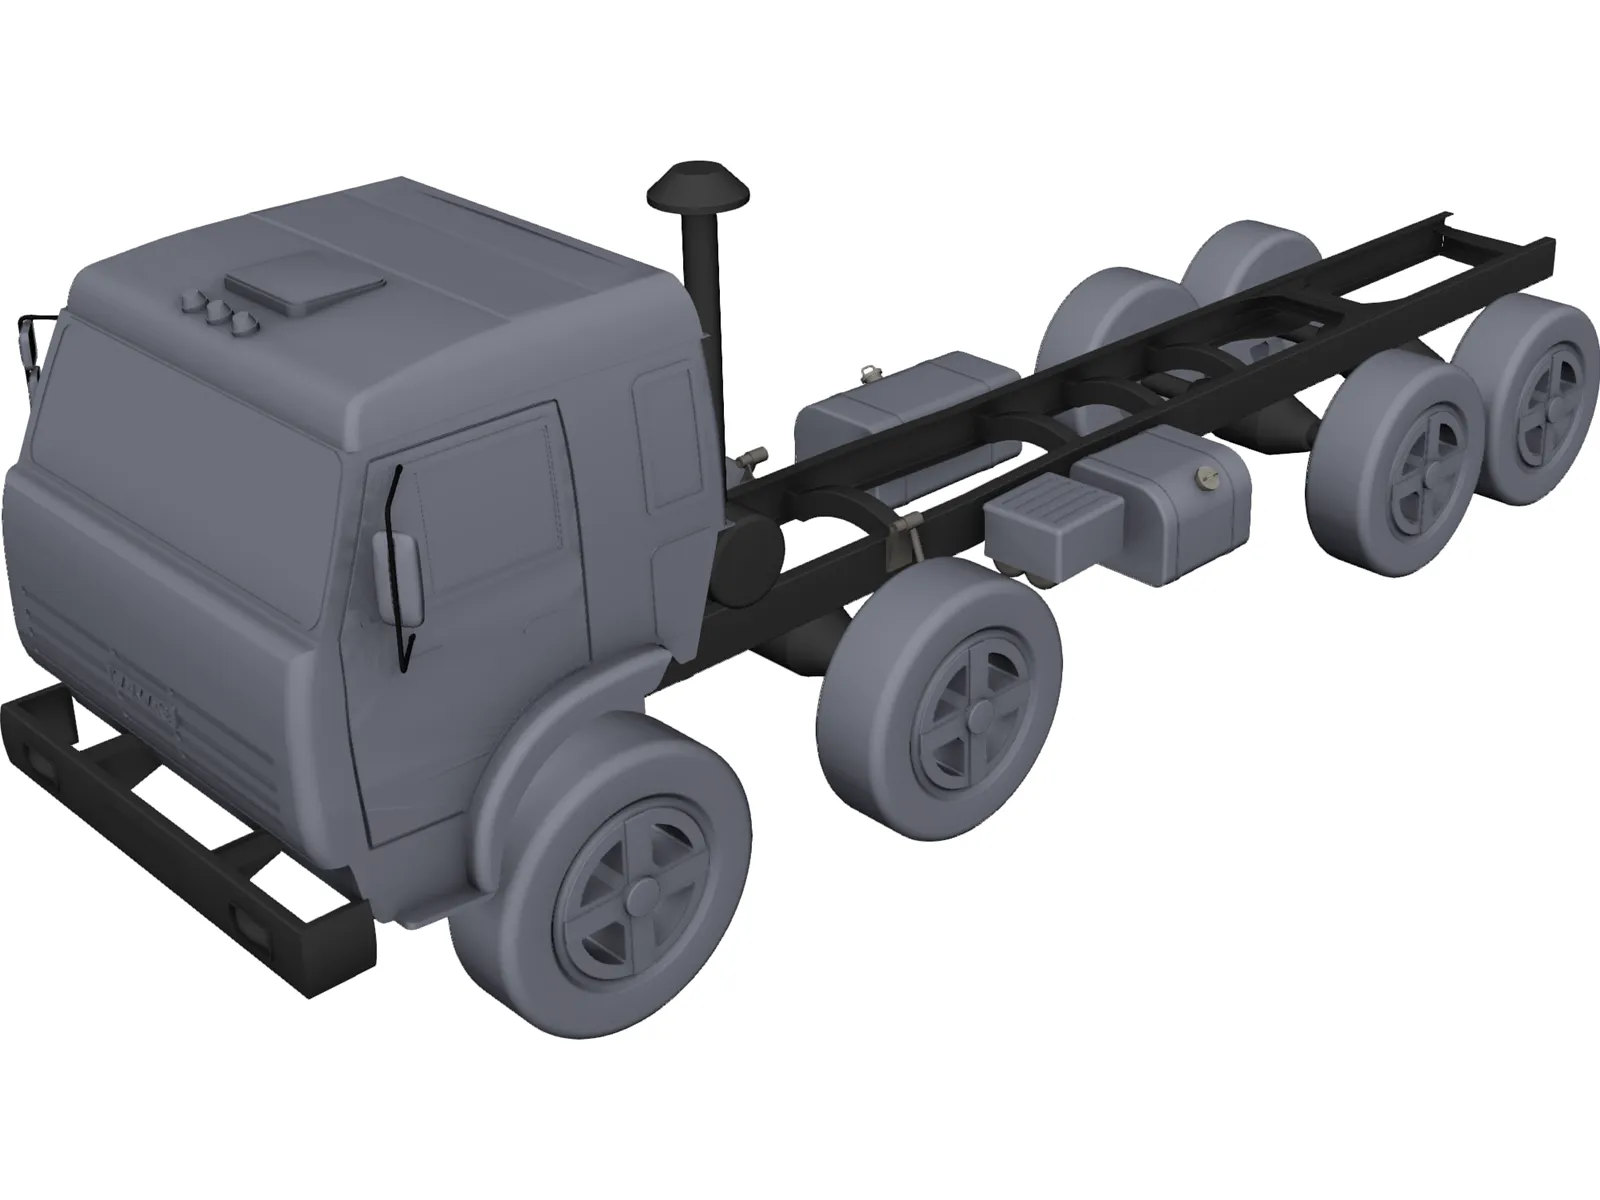 Kamaz 63501 8x8 Military Truck 3D Model